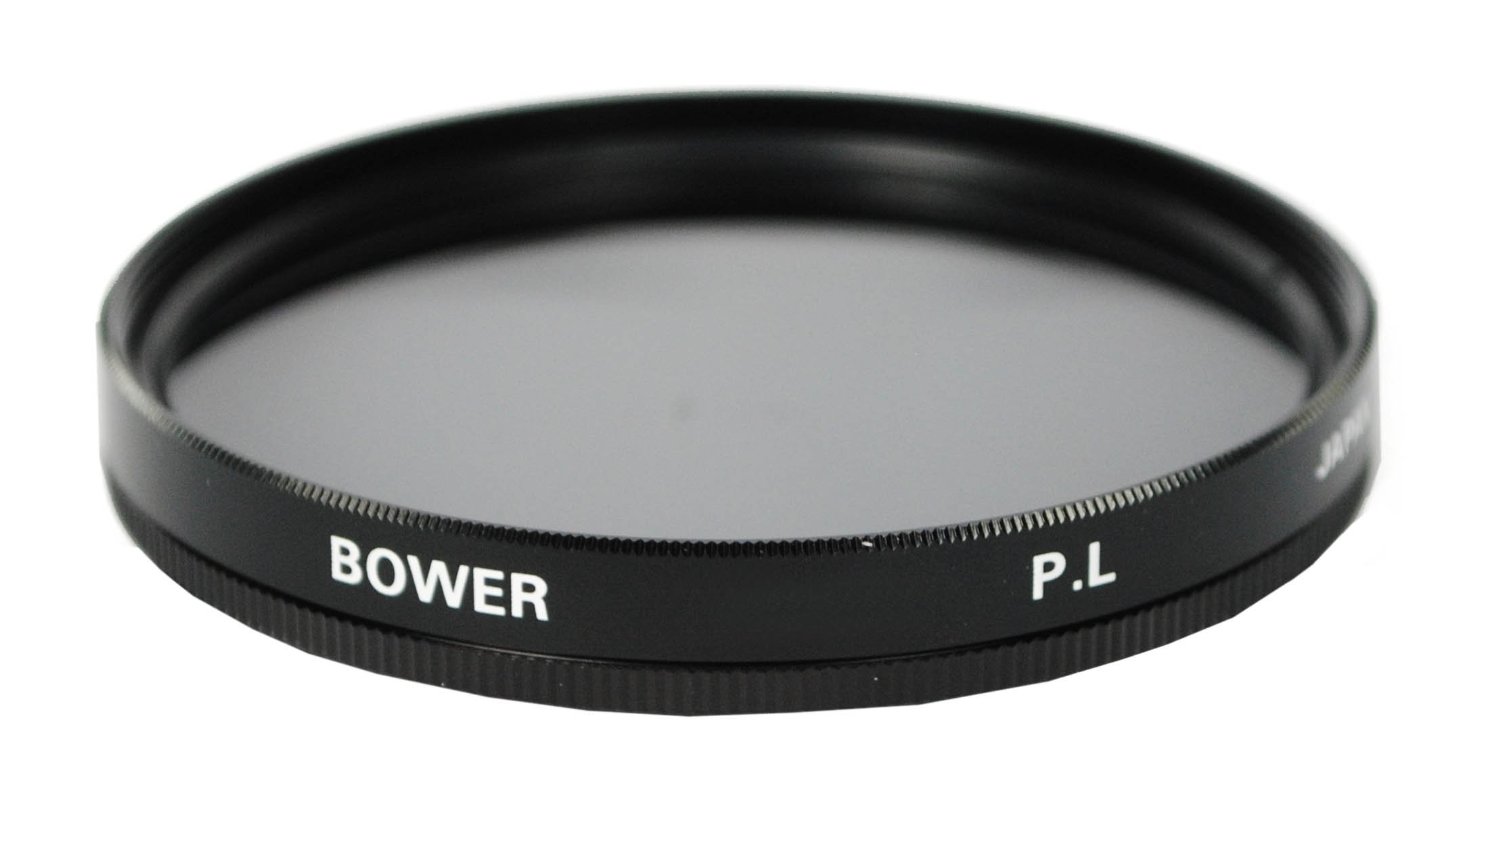 Bower Digital High-Definition 52mm Polarizer Filter